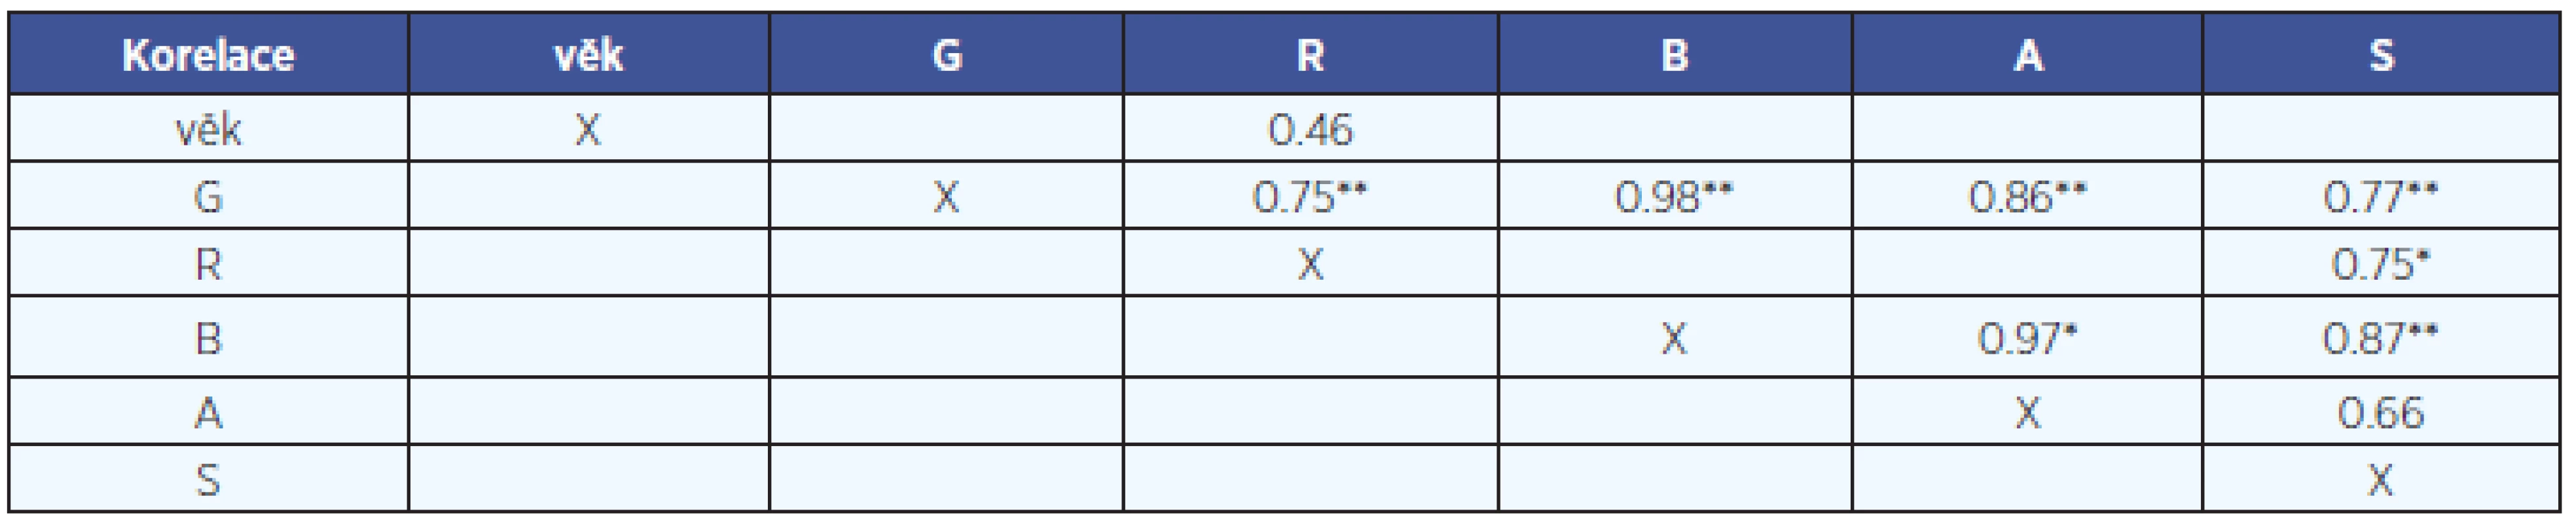 Pearsonova korelace mezi výsledky jednoznačně hodnocených vlastností na GRBAS škálach. Uvedeny jsou jenom korelace s hladinou významnosti p&lt;0,05, * označuje Bonferroniho korekci p&lt;0,05/6, **- korekce p&lt;0,01/6.